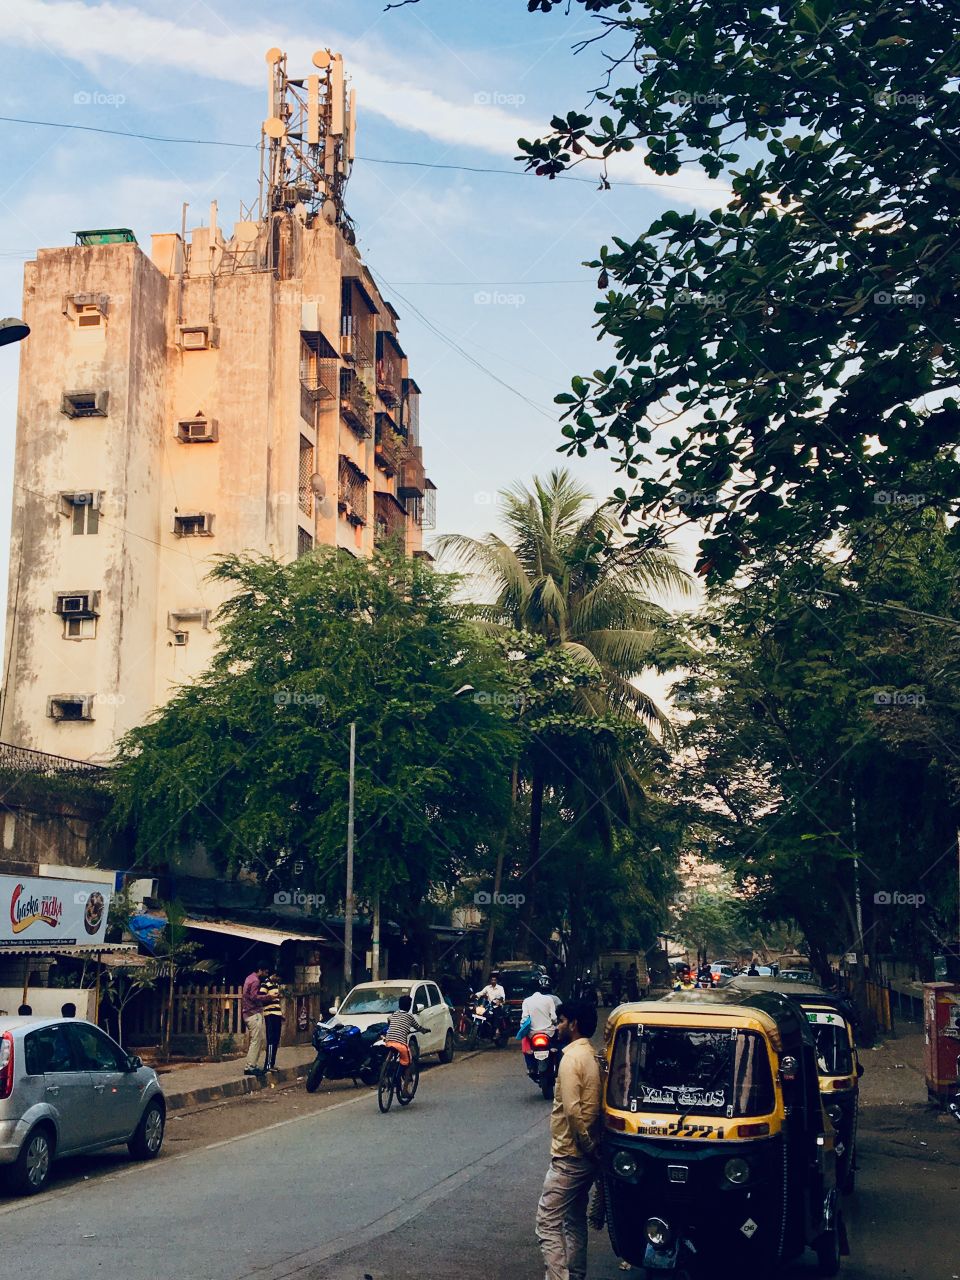 Mumbai street